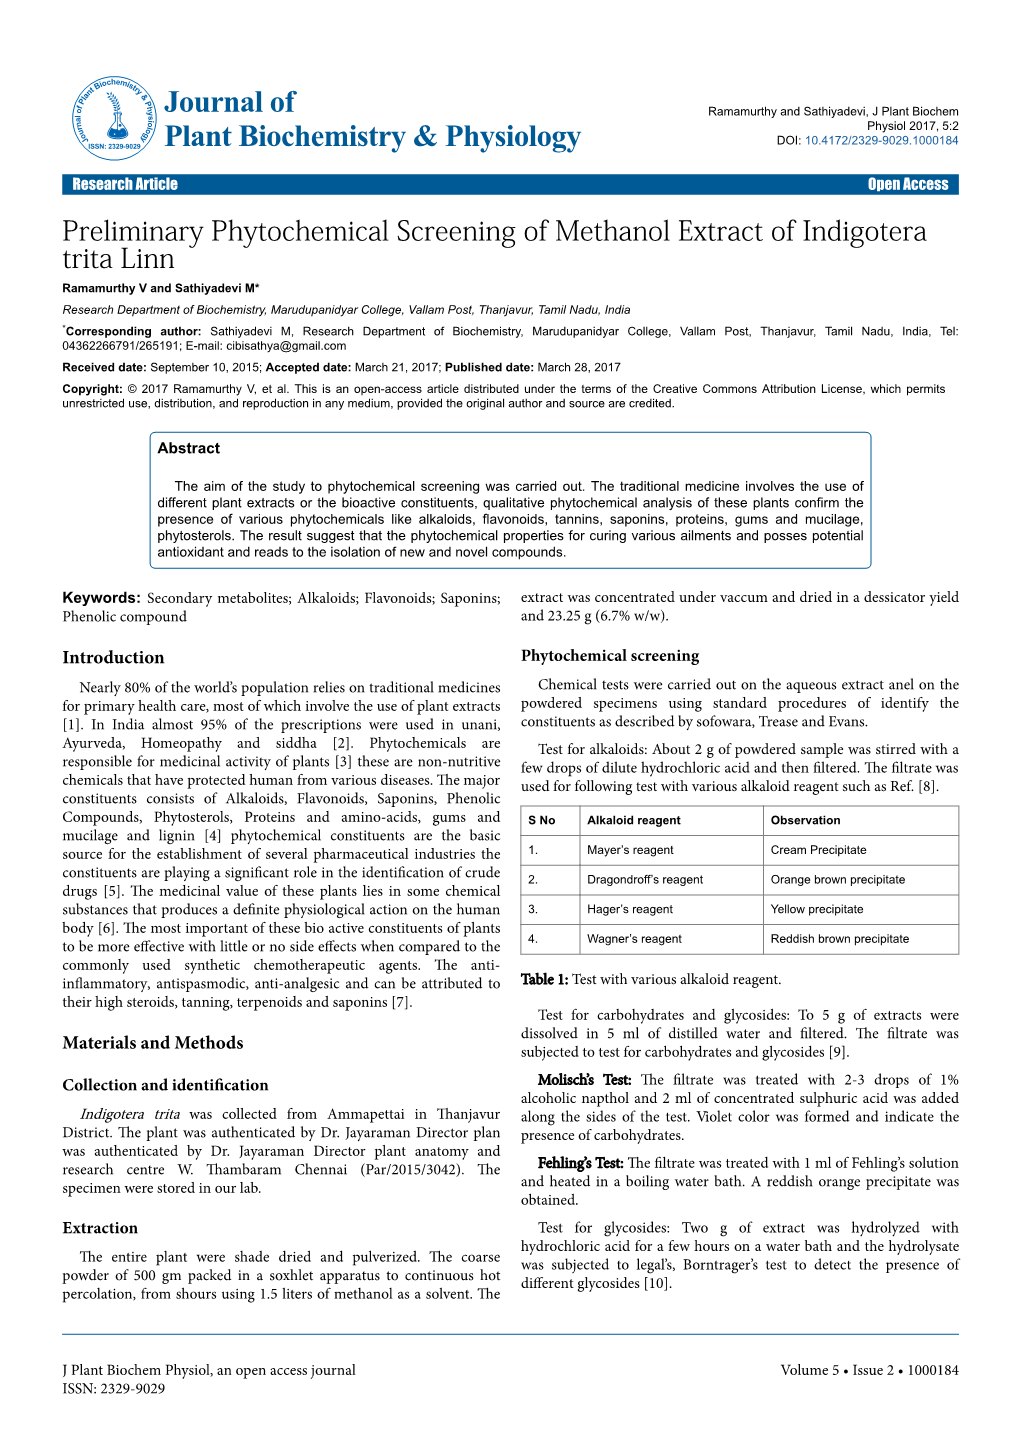 Preliminary Phytochemical Screening of Methanol Extract of Indigotera